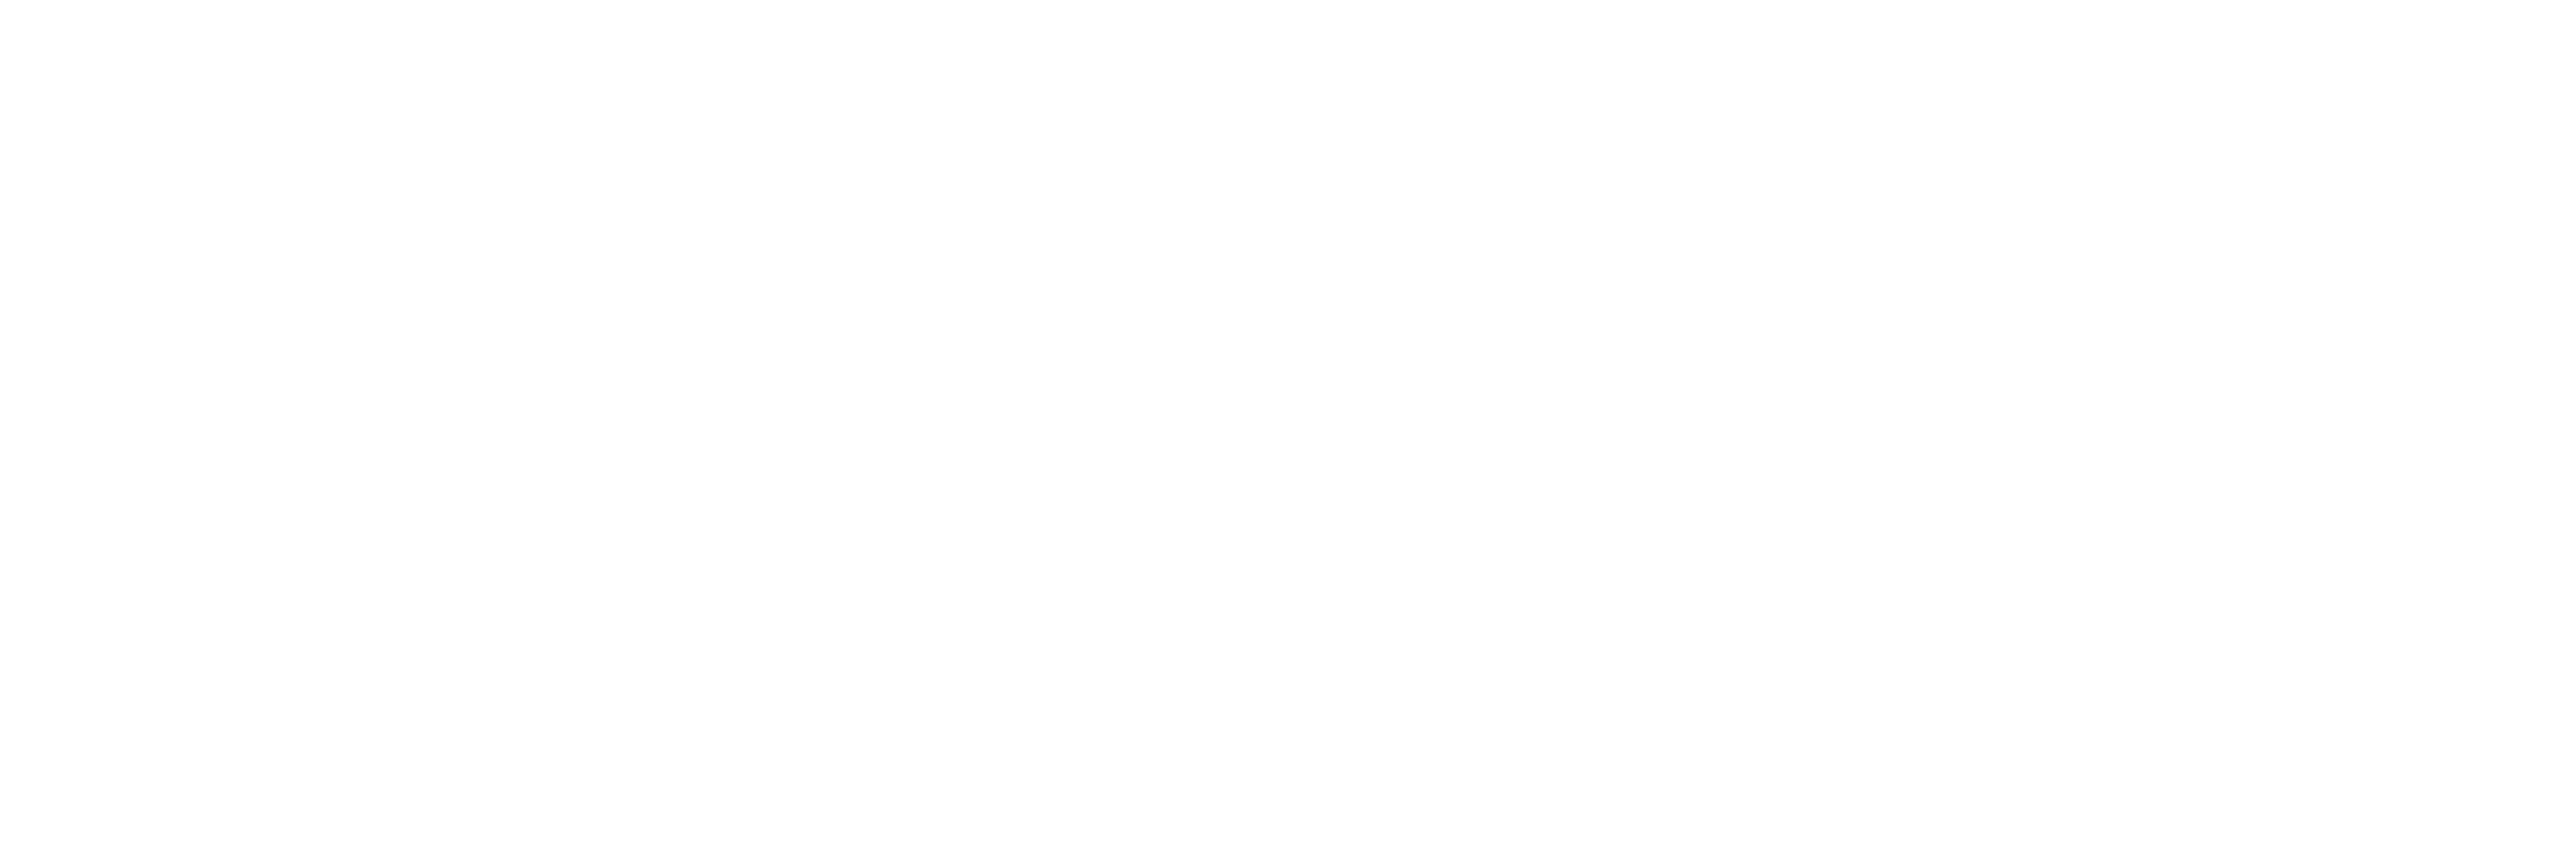 Hightrail (Demo)